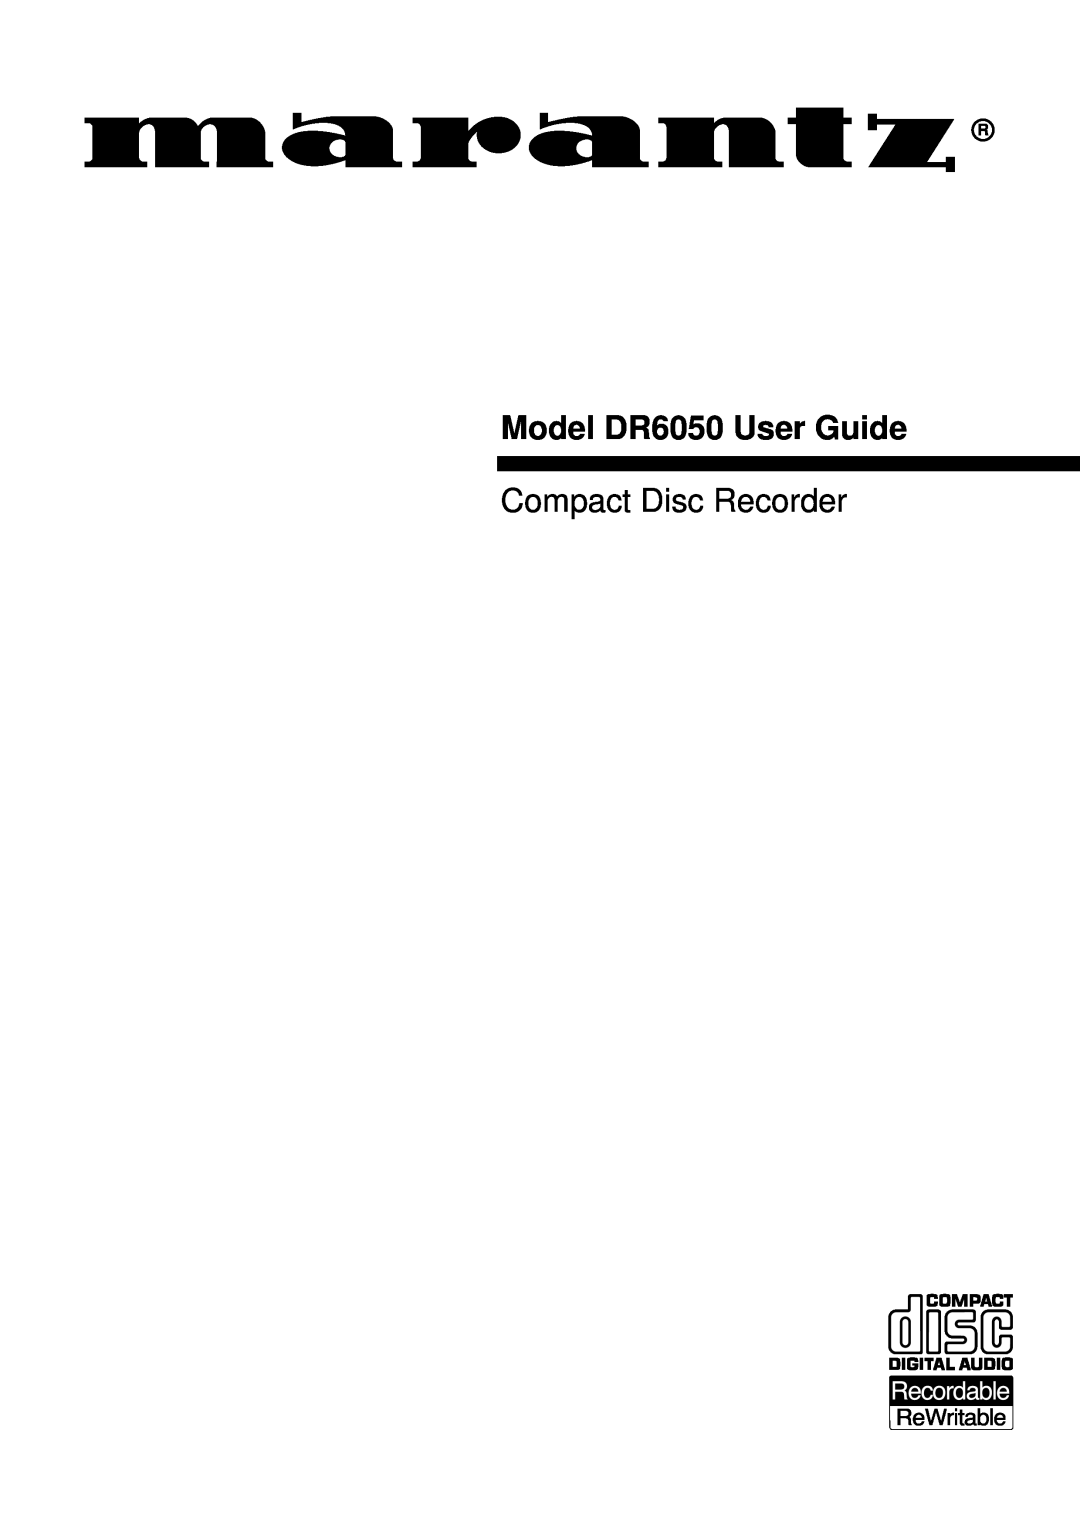 Marantz manual Model DR6050 User Guide, ReWritable, Compact Disc Recorder 